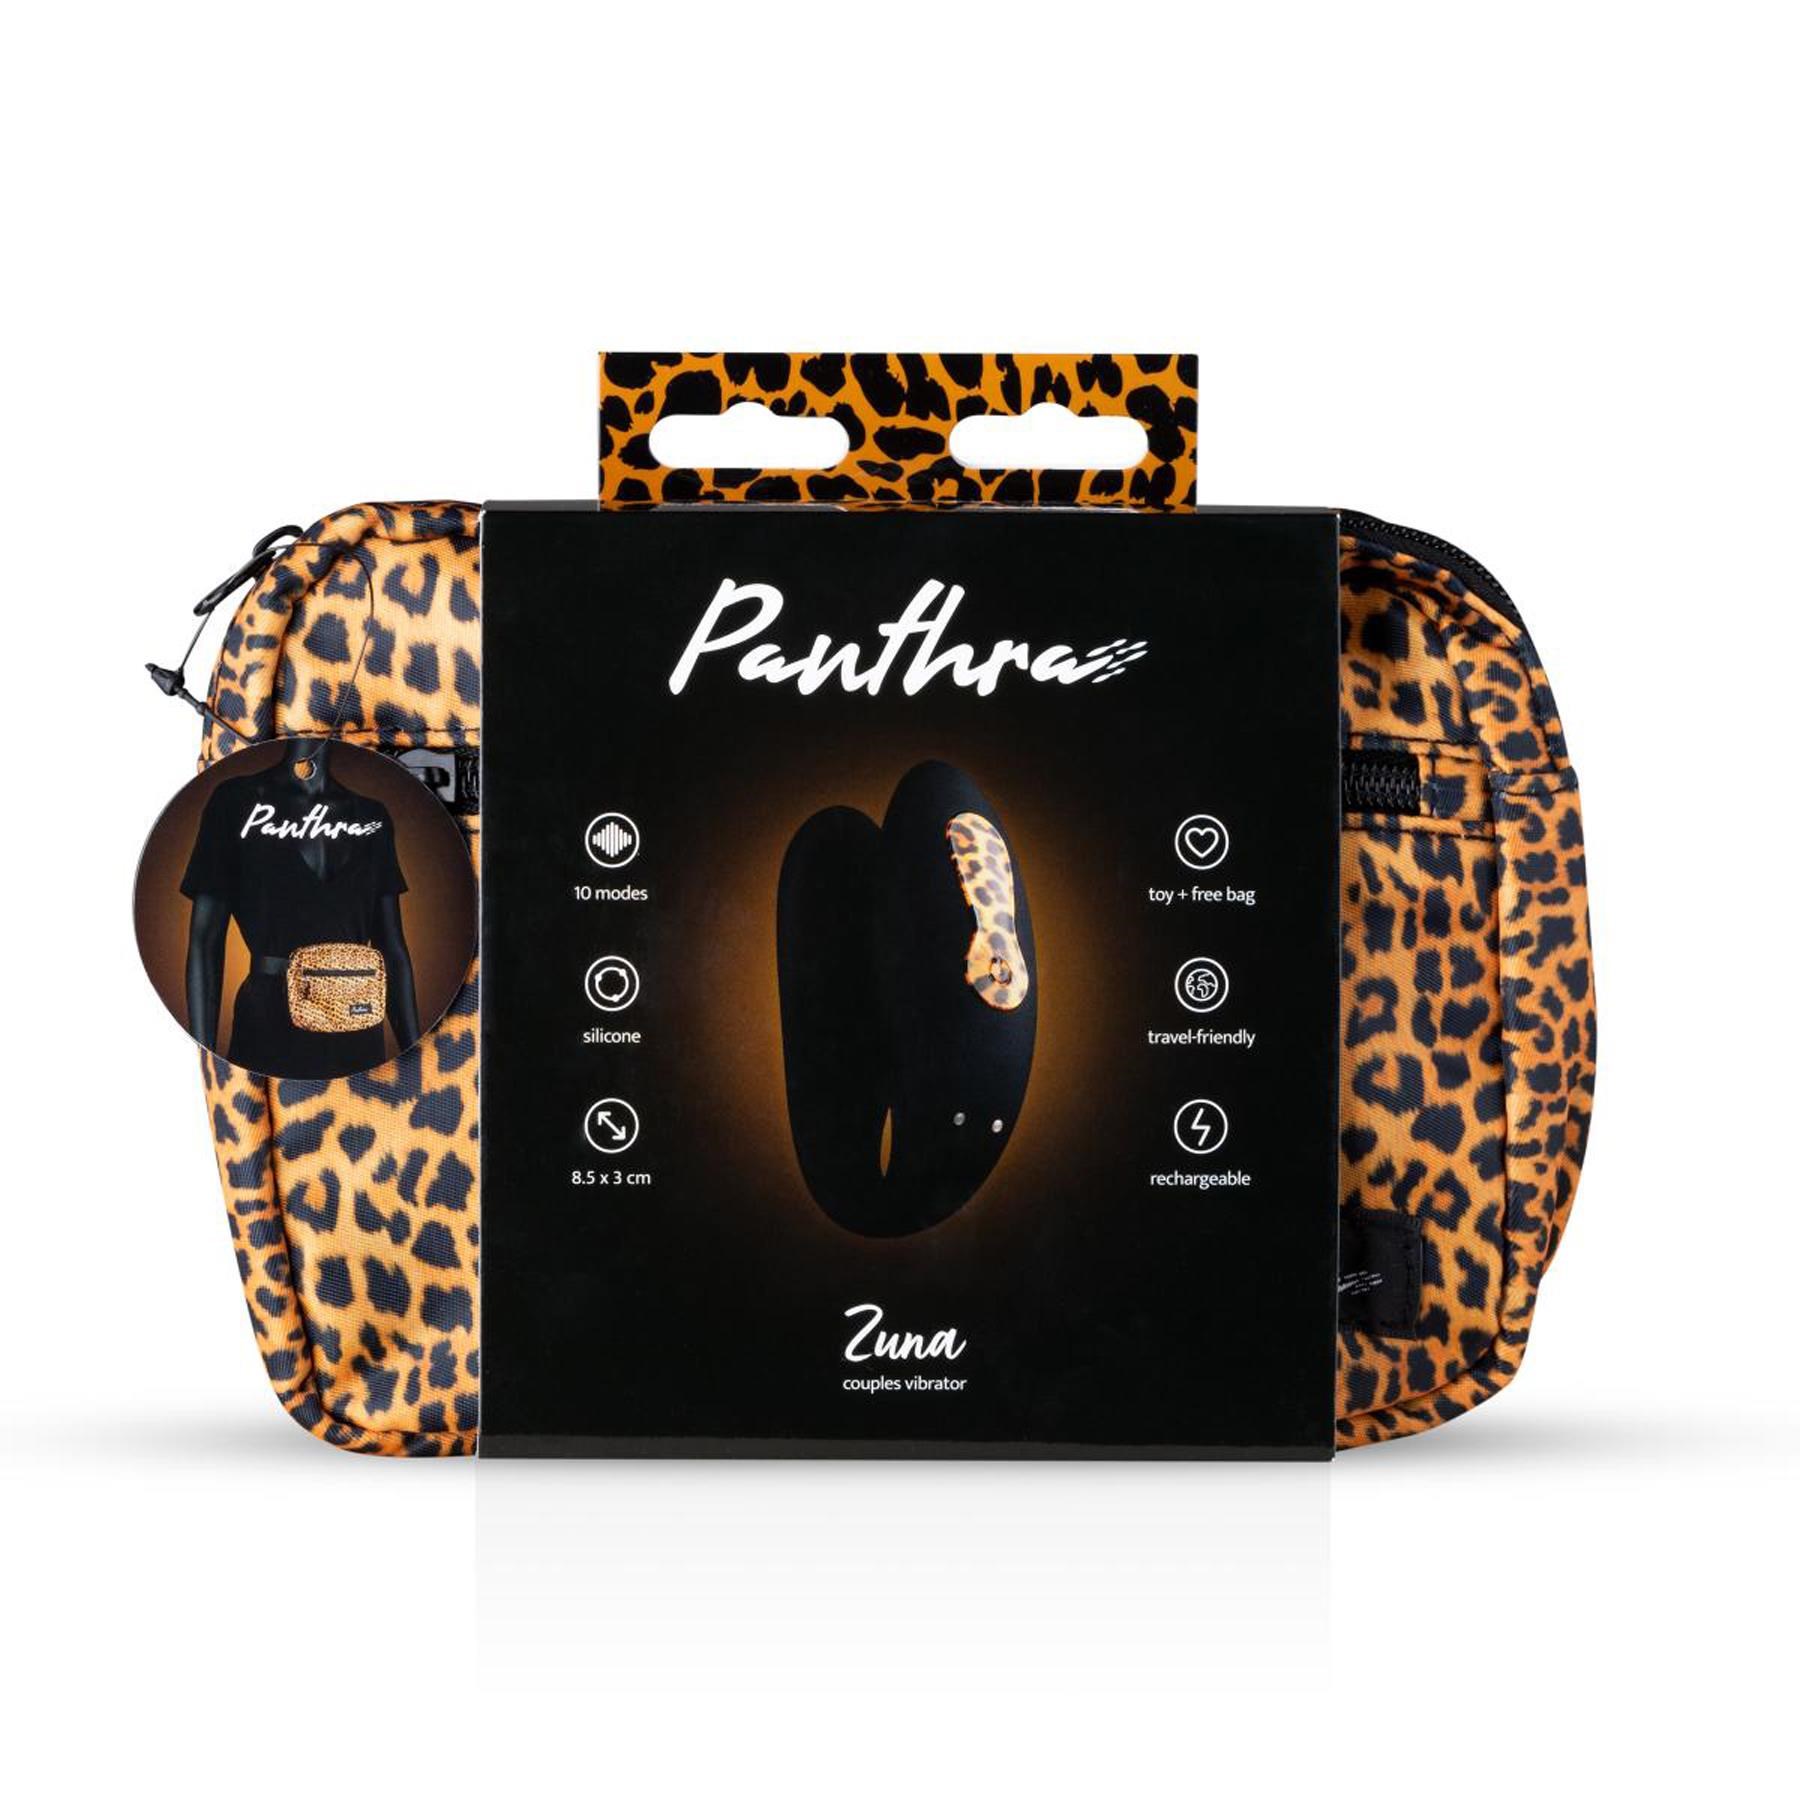 Panthra Zuna Couples Vibrator - Packaging Shot